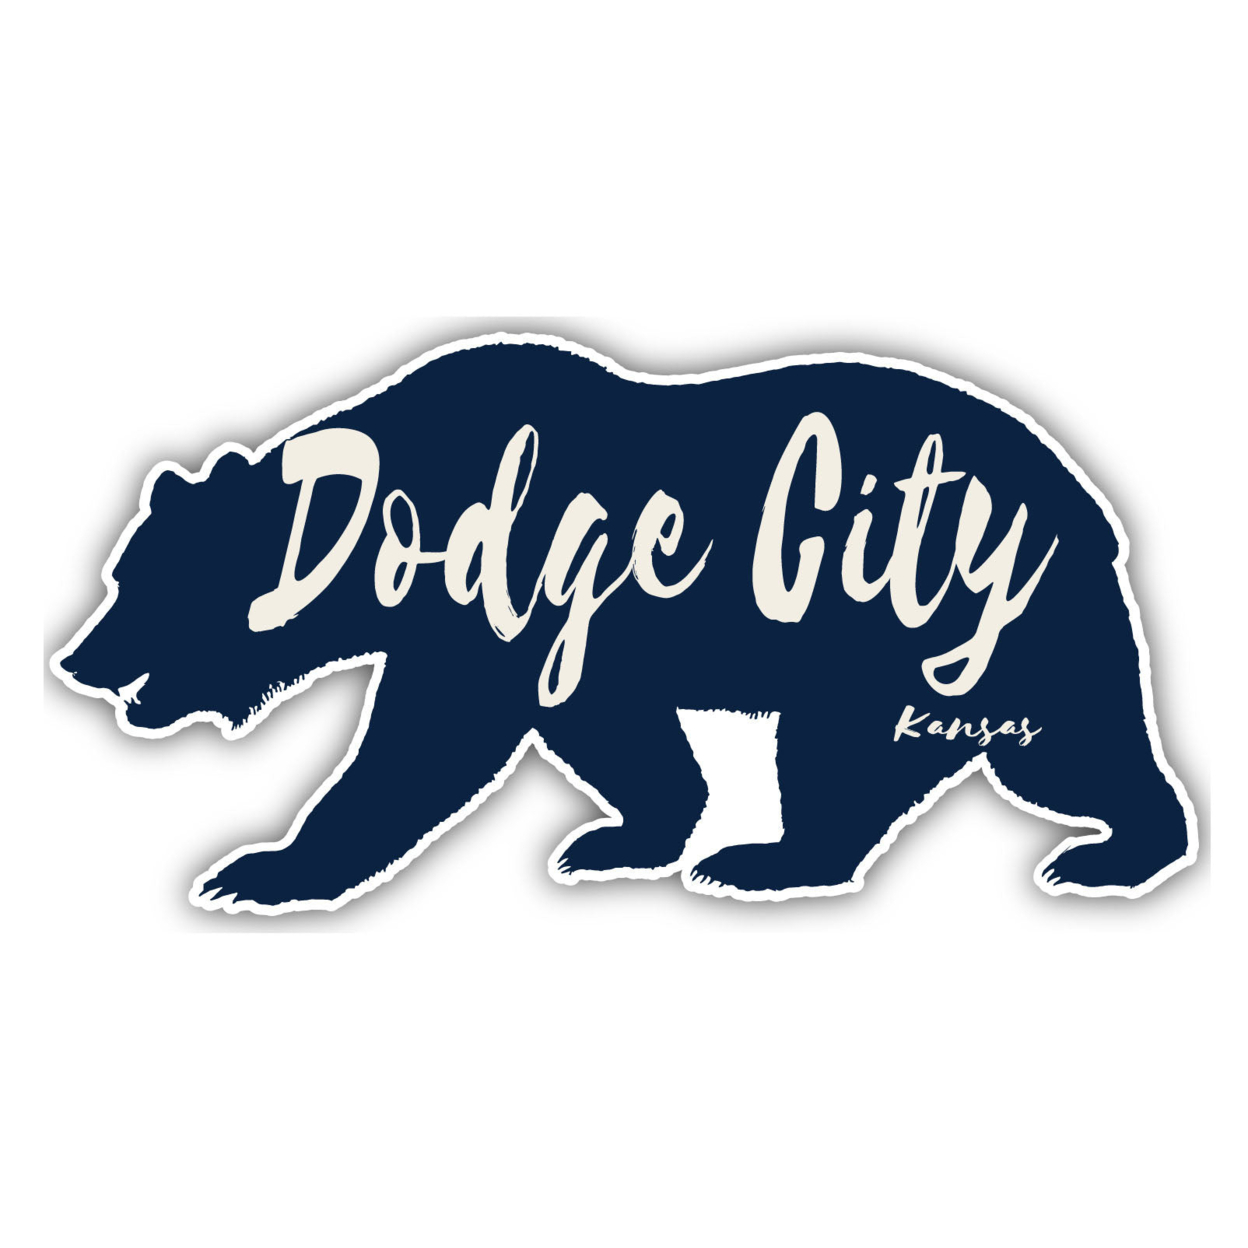 Dodge City Kansas Souvenir Decorative Stickers (Choose Theme And Size) - Single Unit, 6-Inch, Adventures Awaits